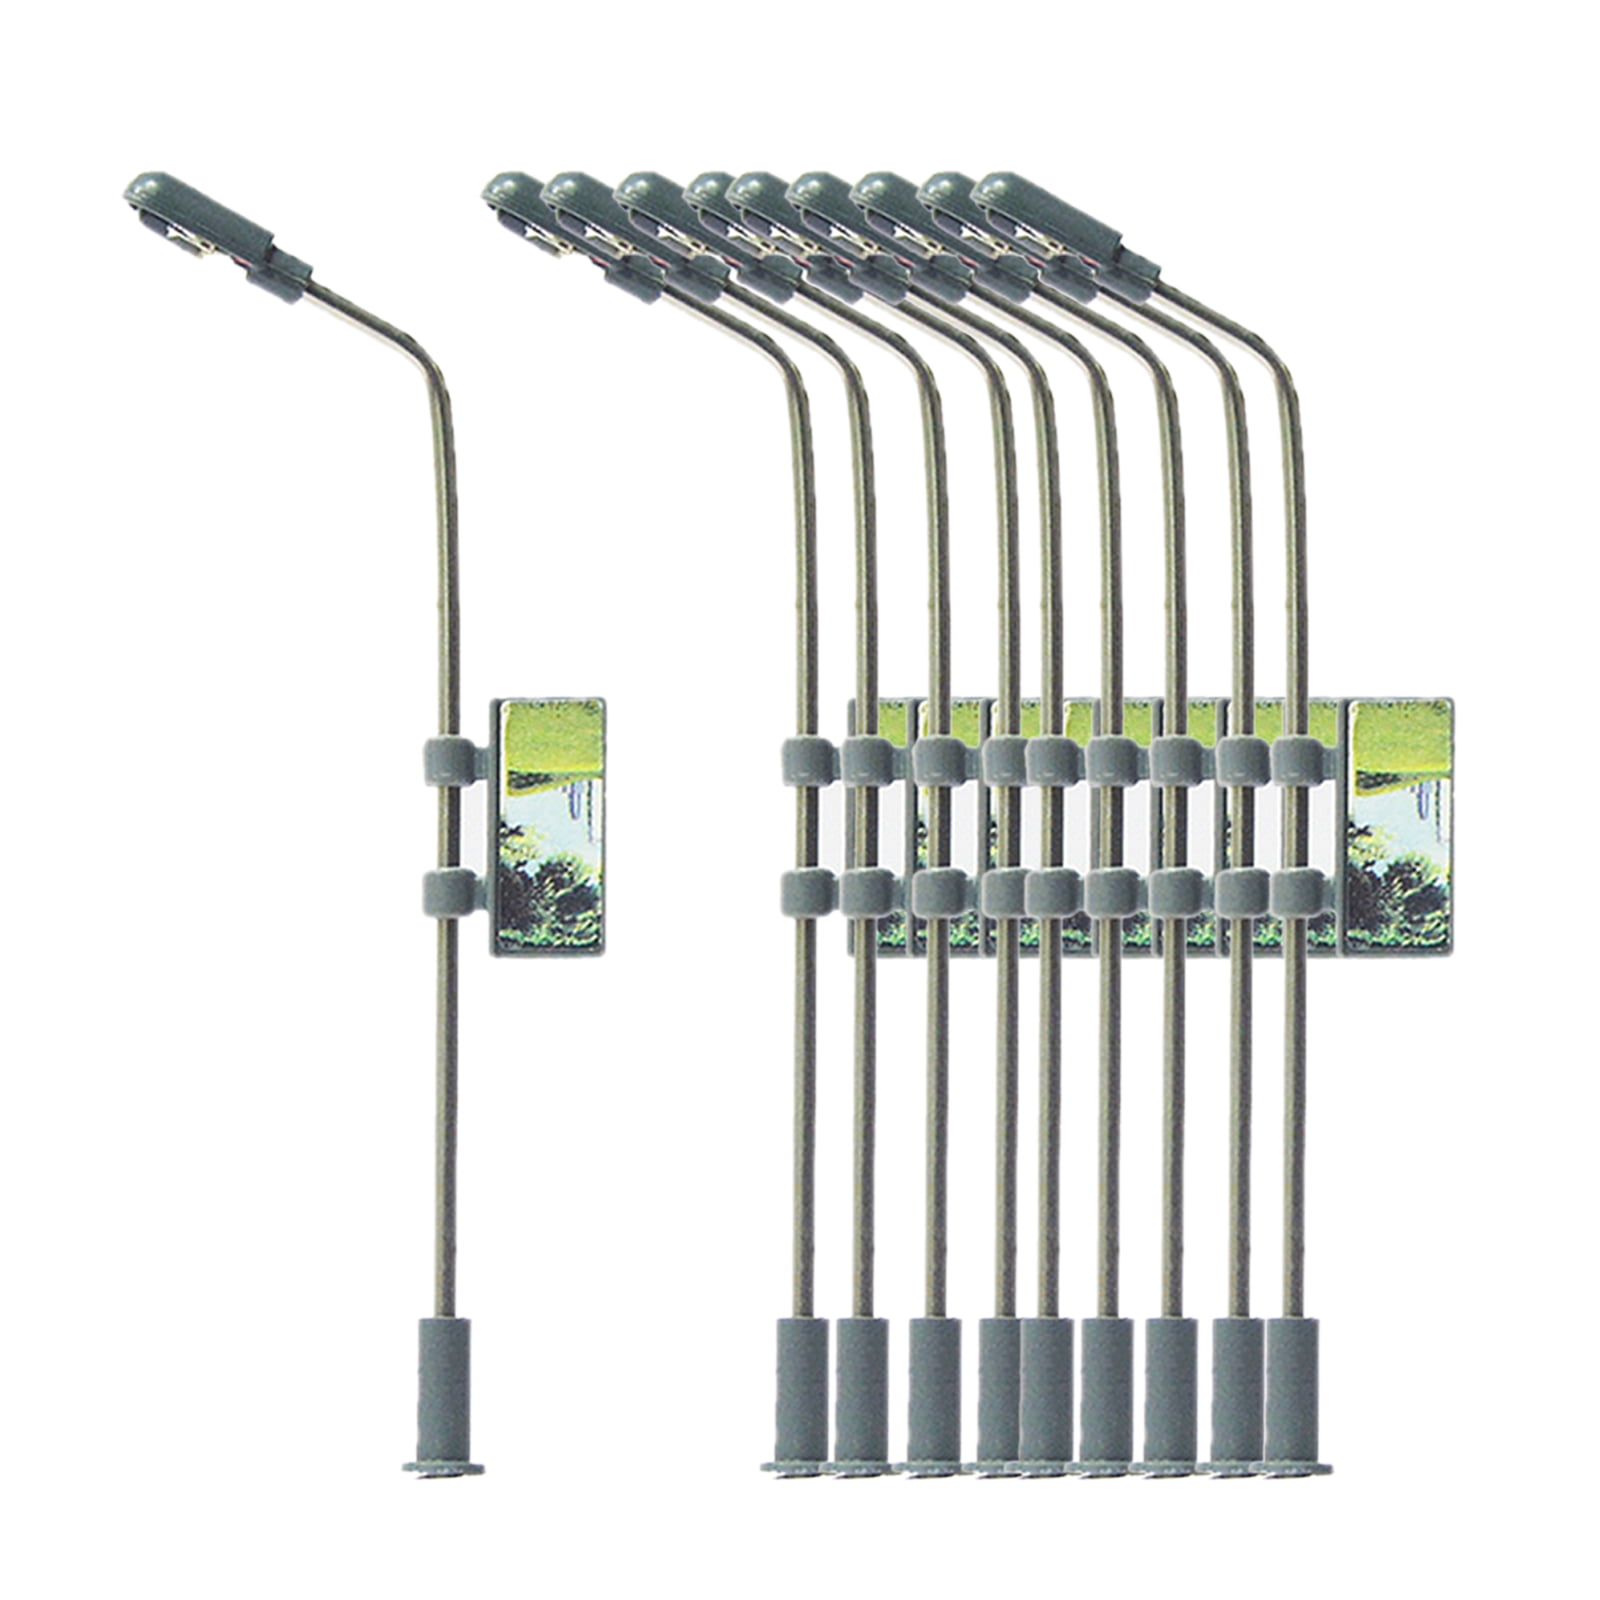 10X Dual Heads LED 1:150 Light Metal Lamppost Model Train Railway Street Scenery